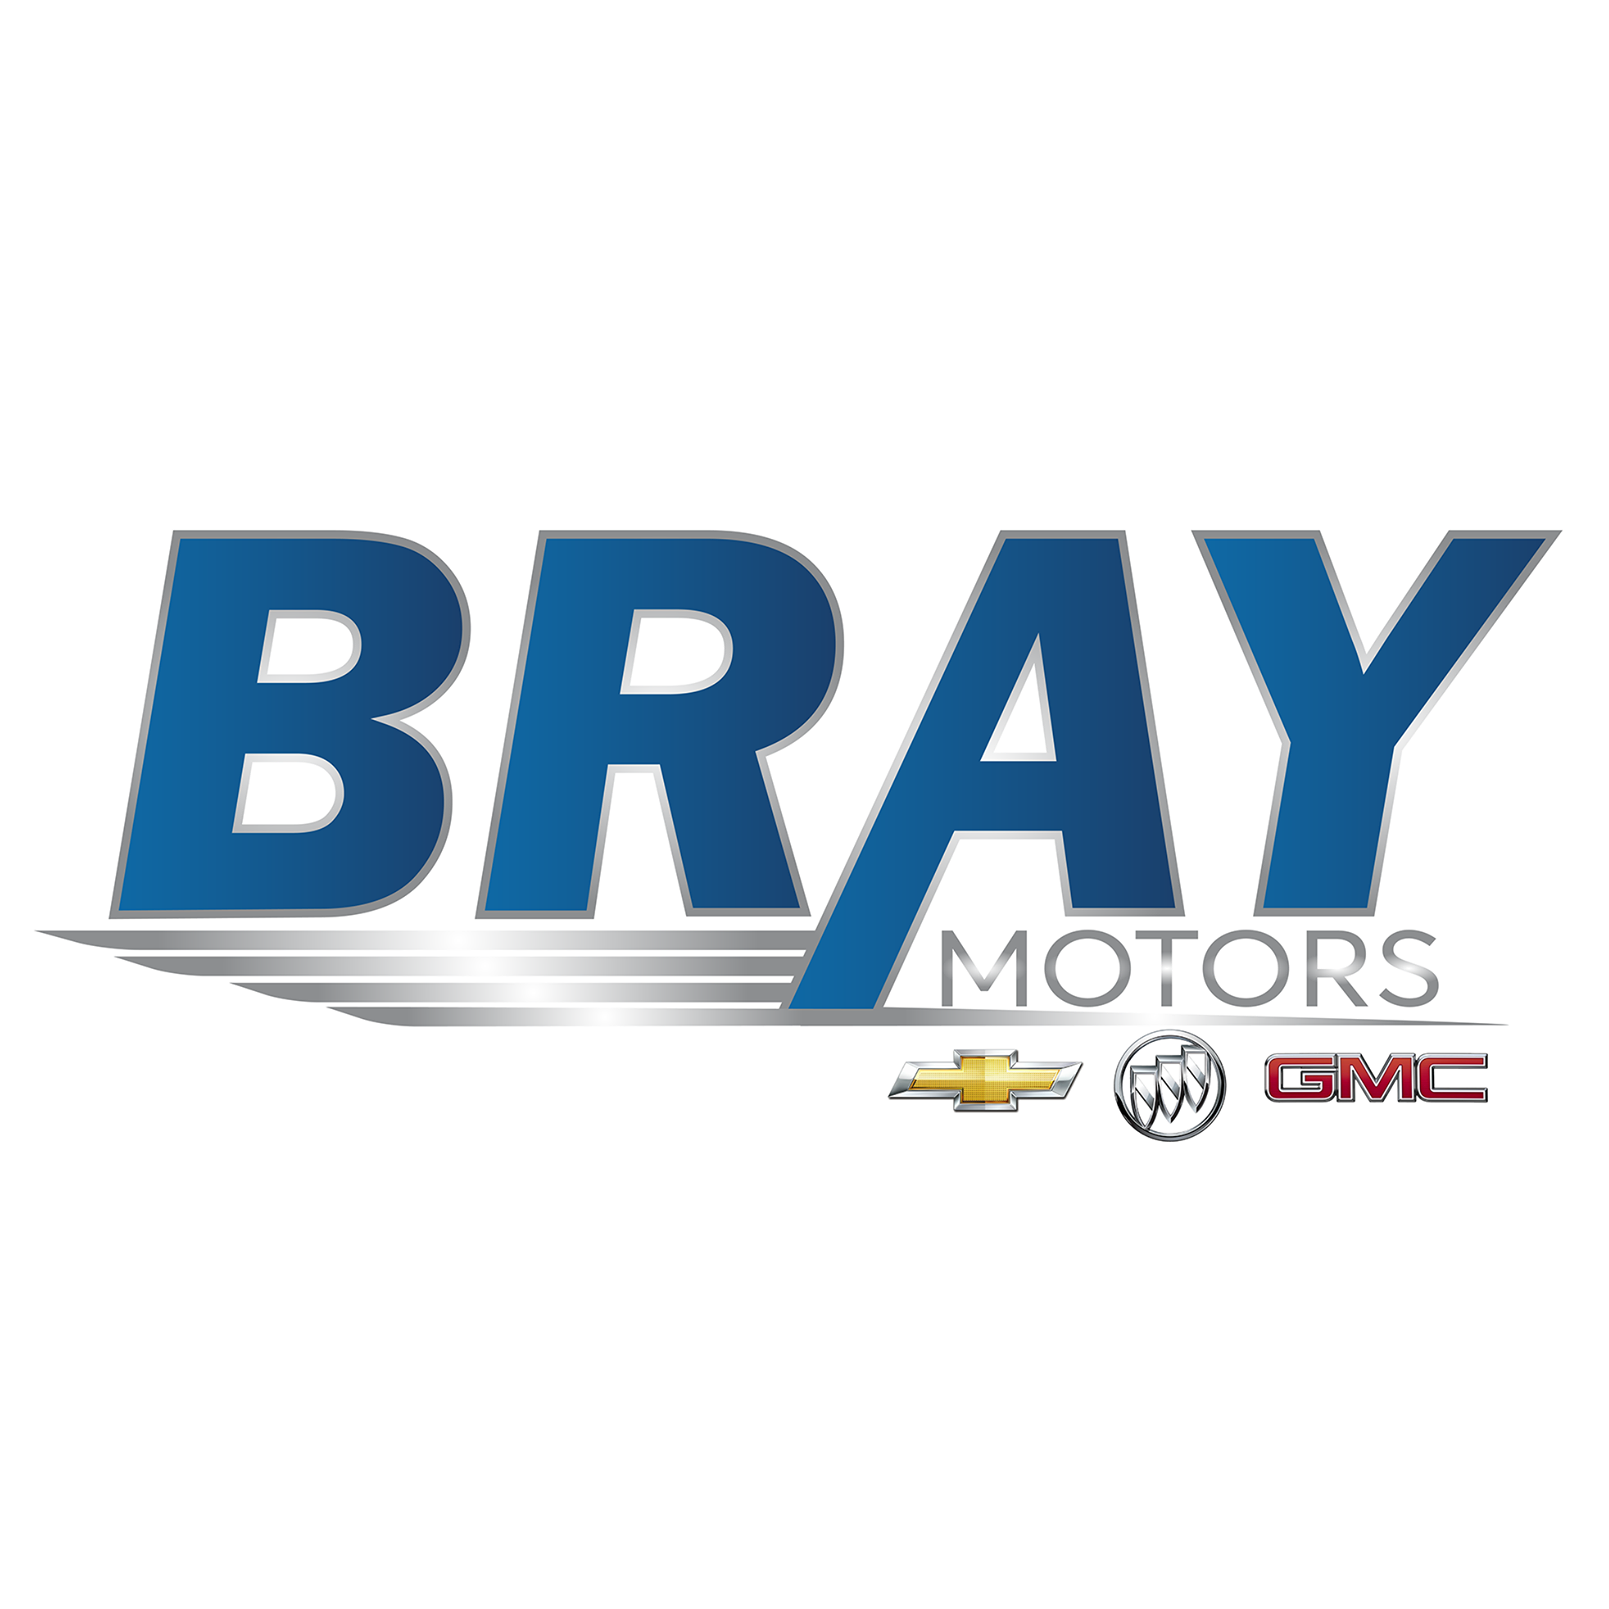 Bray Motors